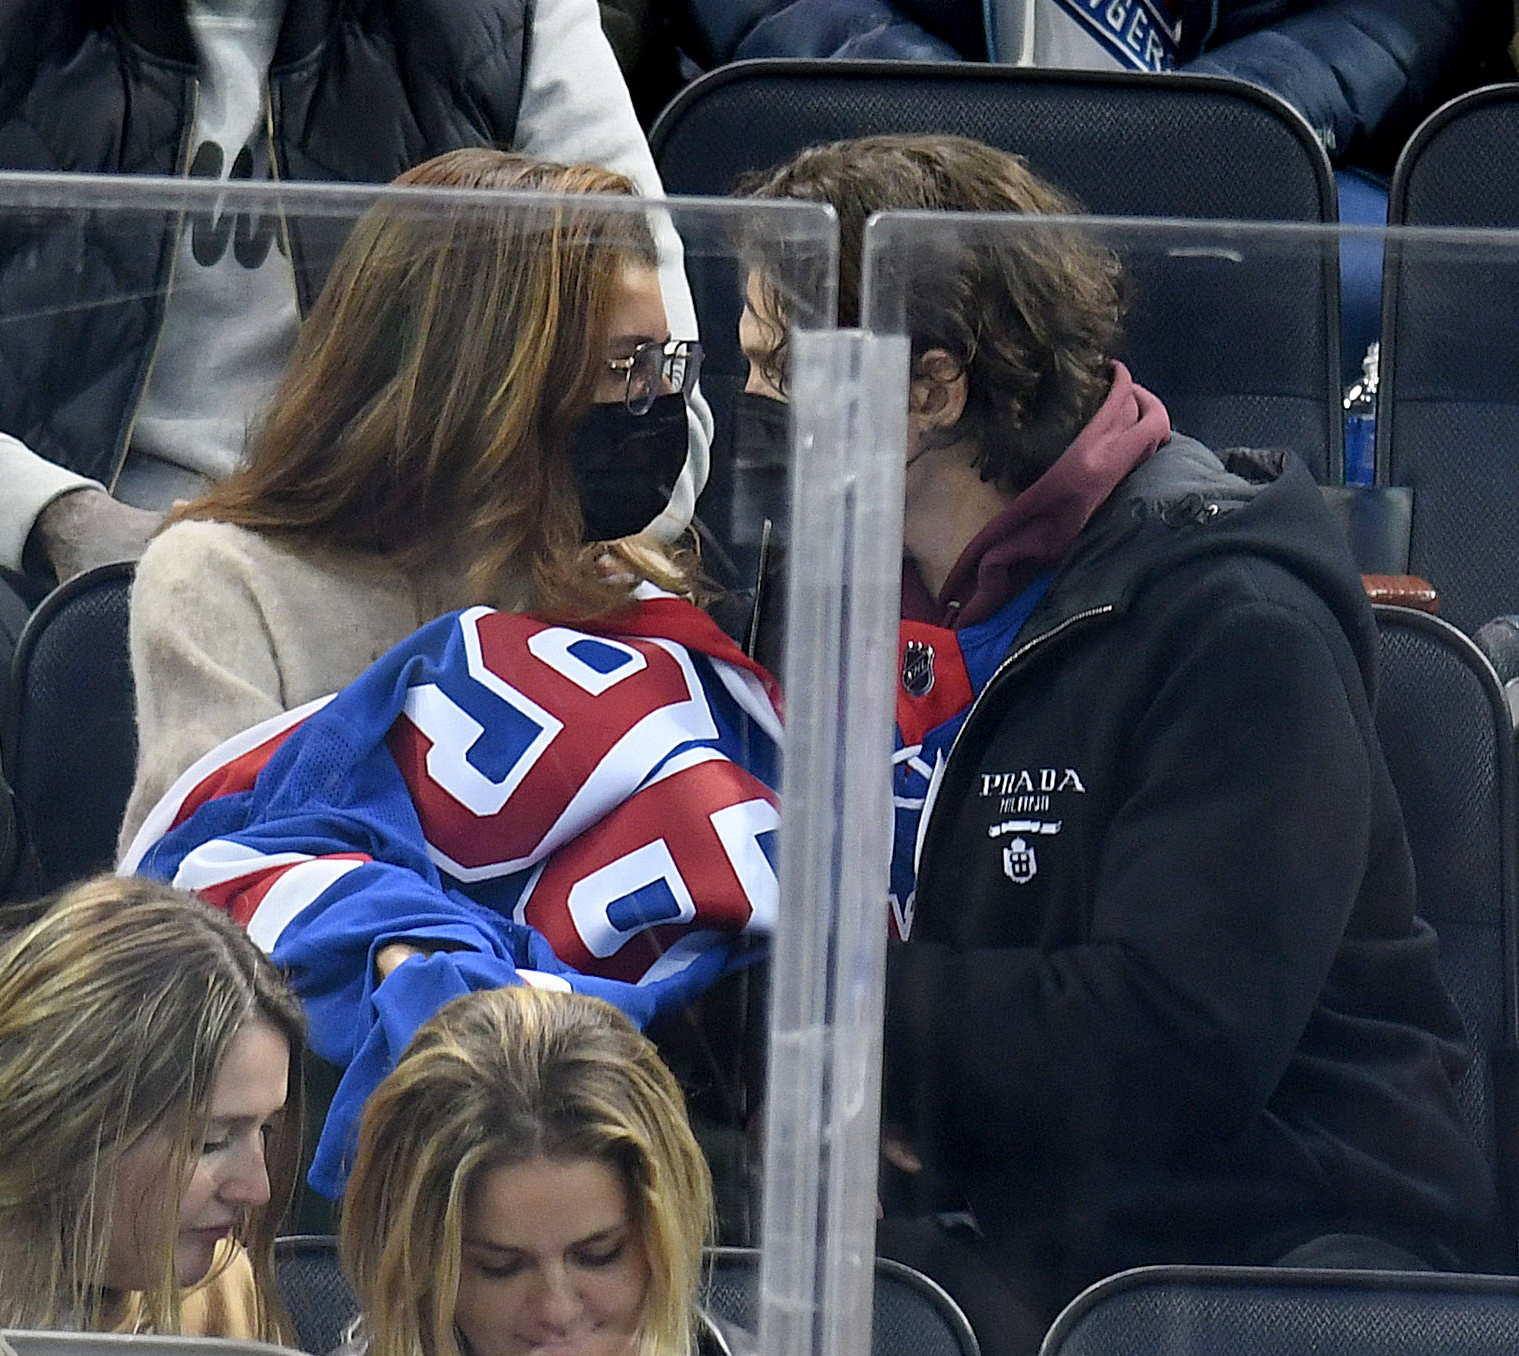 Zendaya and Tom Holland wear matching jerseys to hockey game